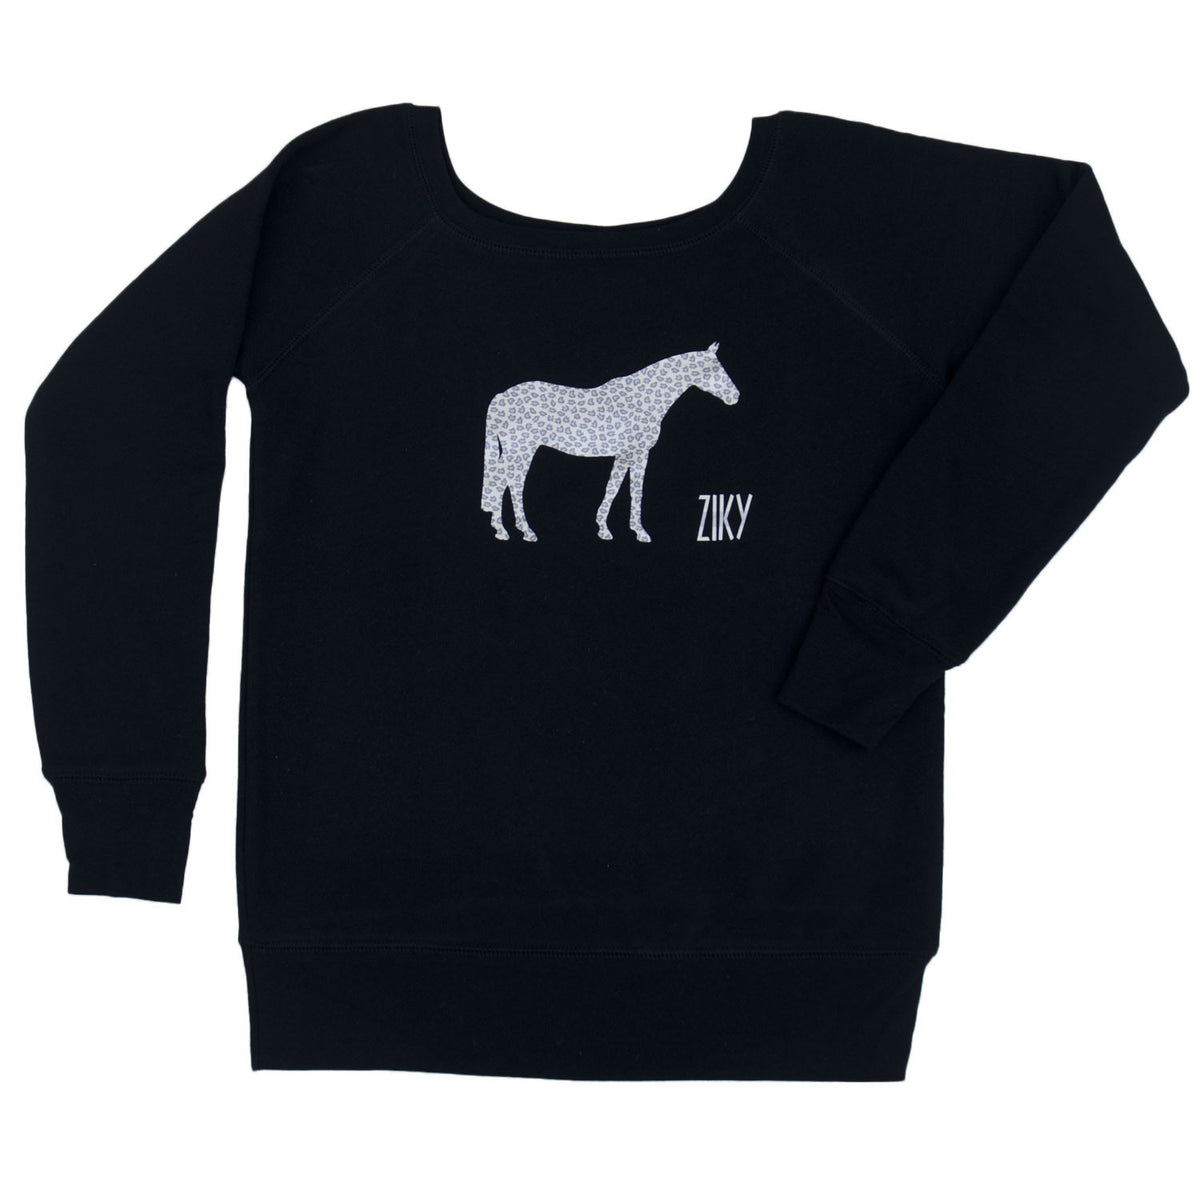 Scoop neck horse sweater